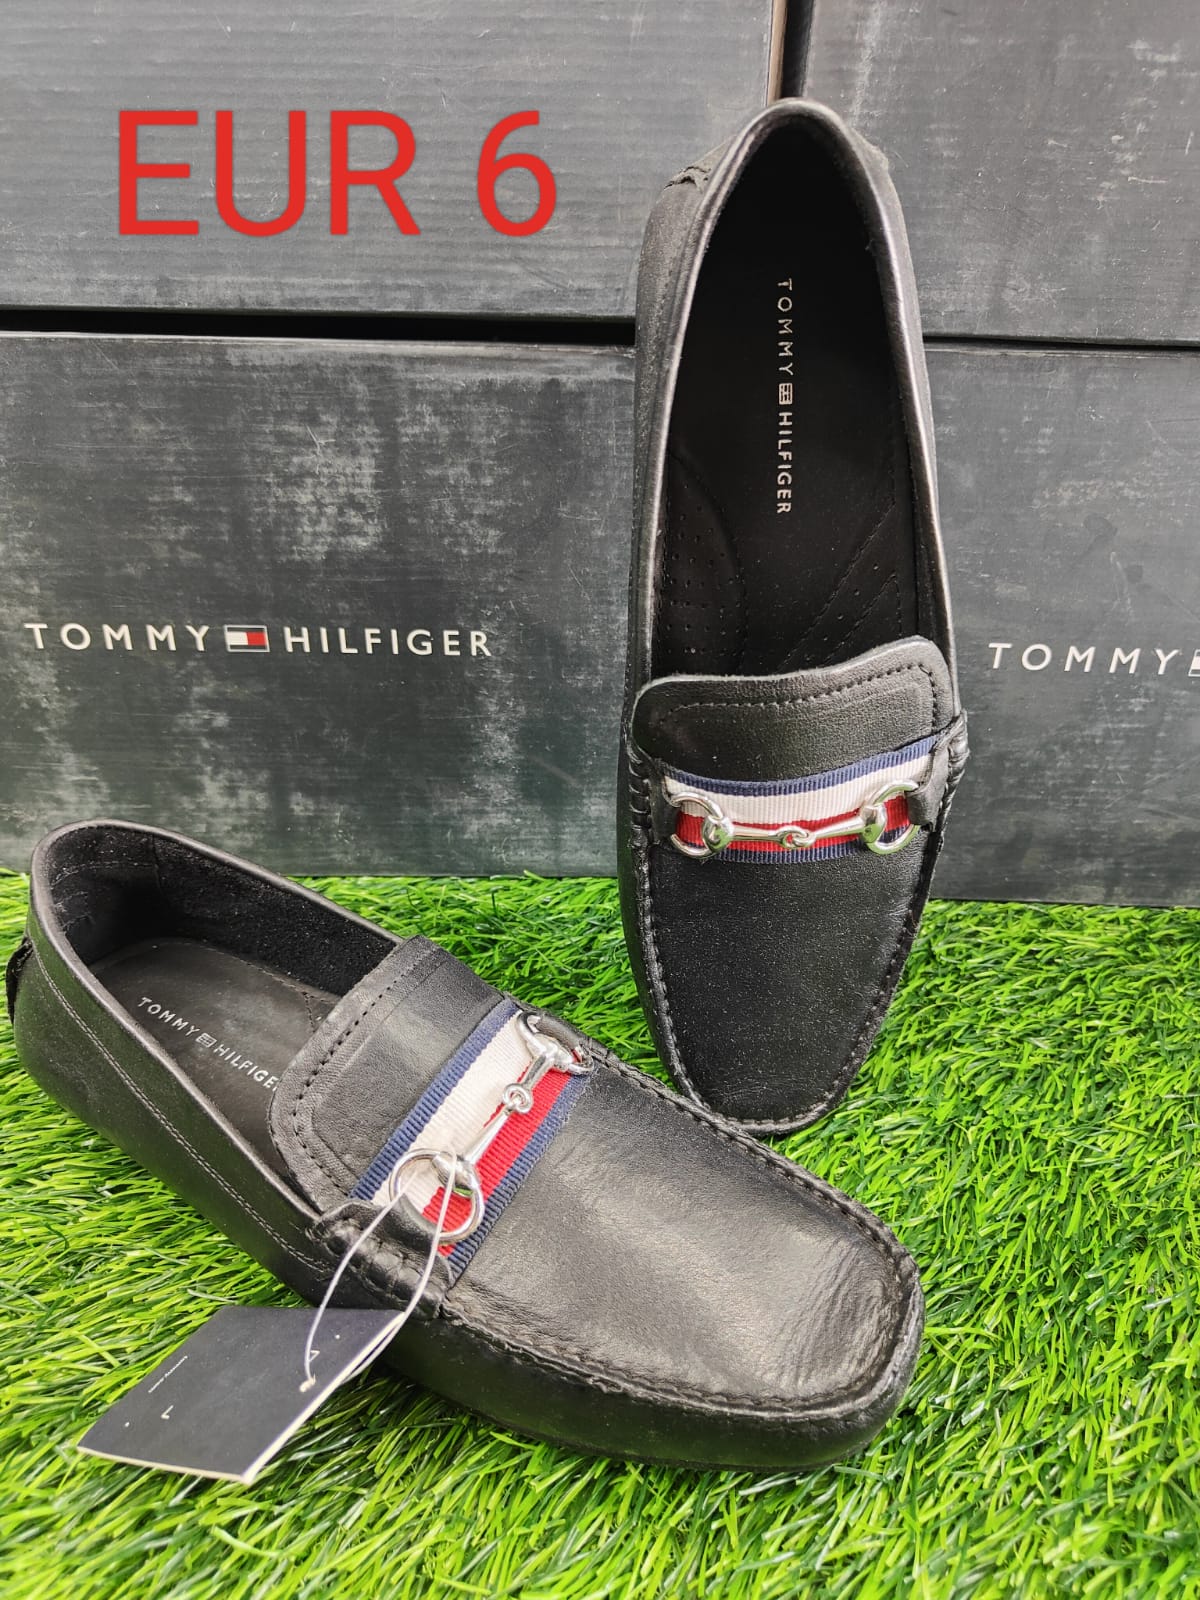 Details View - TOMMY HILFIGER lofar shoes photos - Tommy Hilfiger, lofar shoes, UK size 6, fashion, quality, elegance, Navkar The Brand Hub, Surendranagar, Gujarat, India